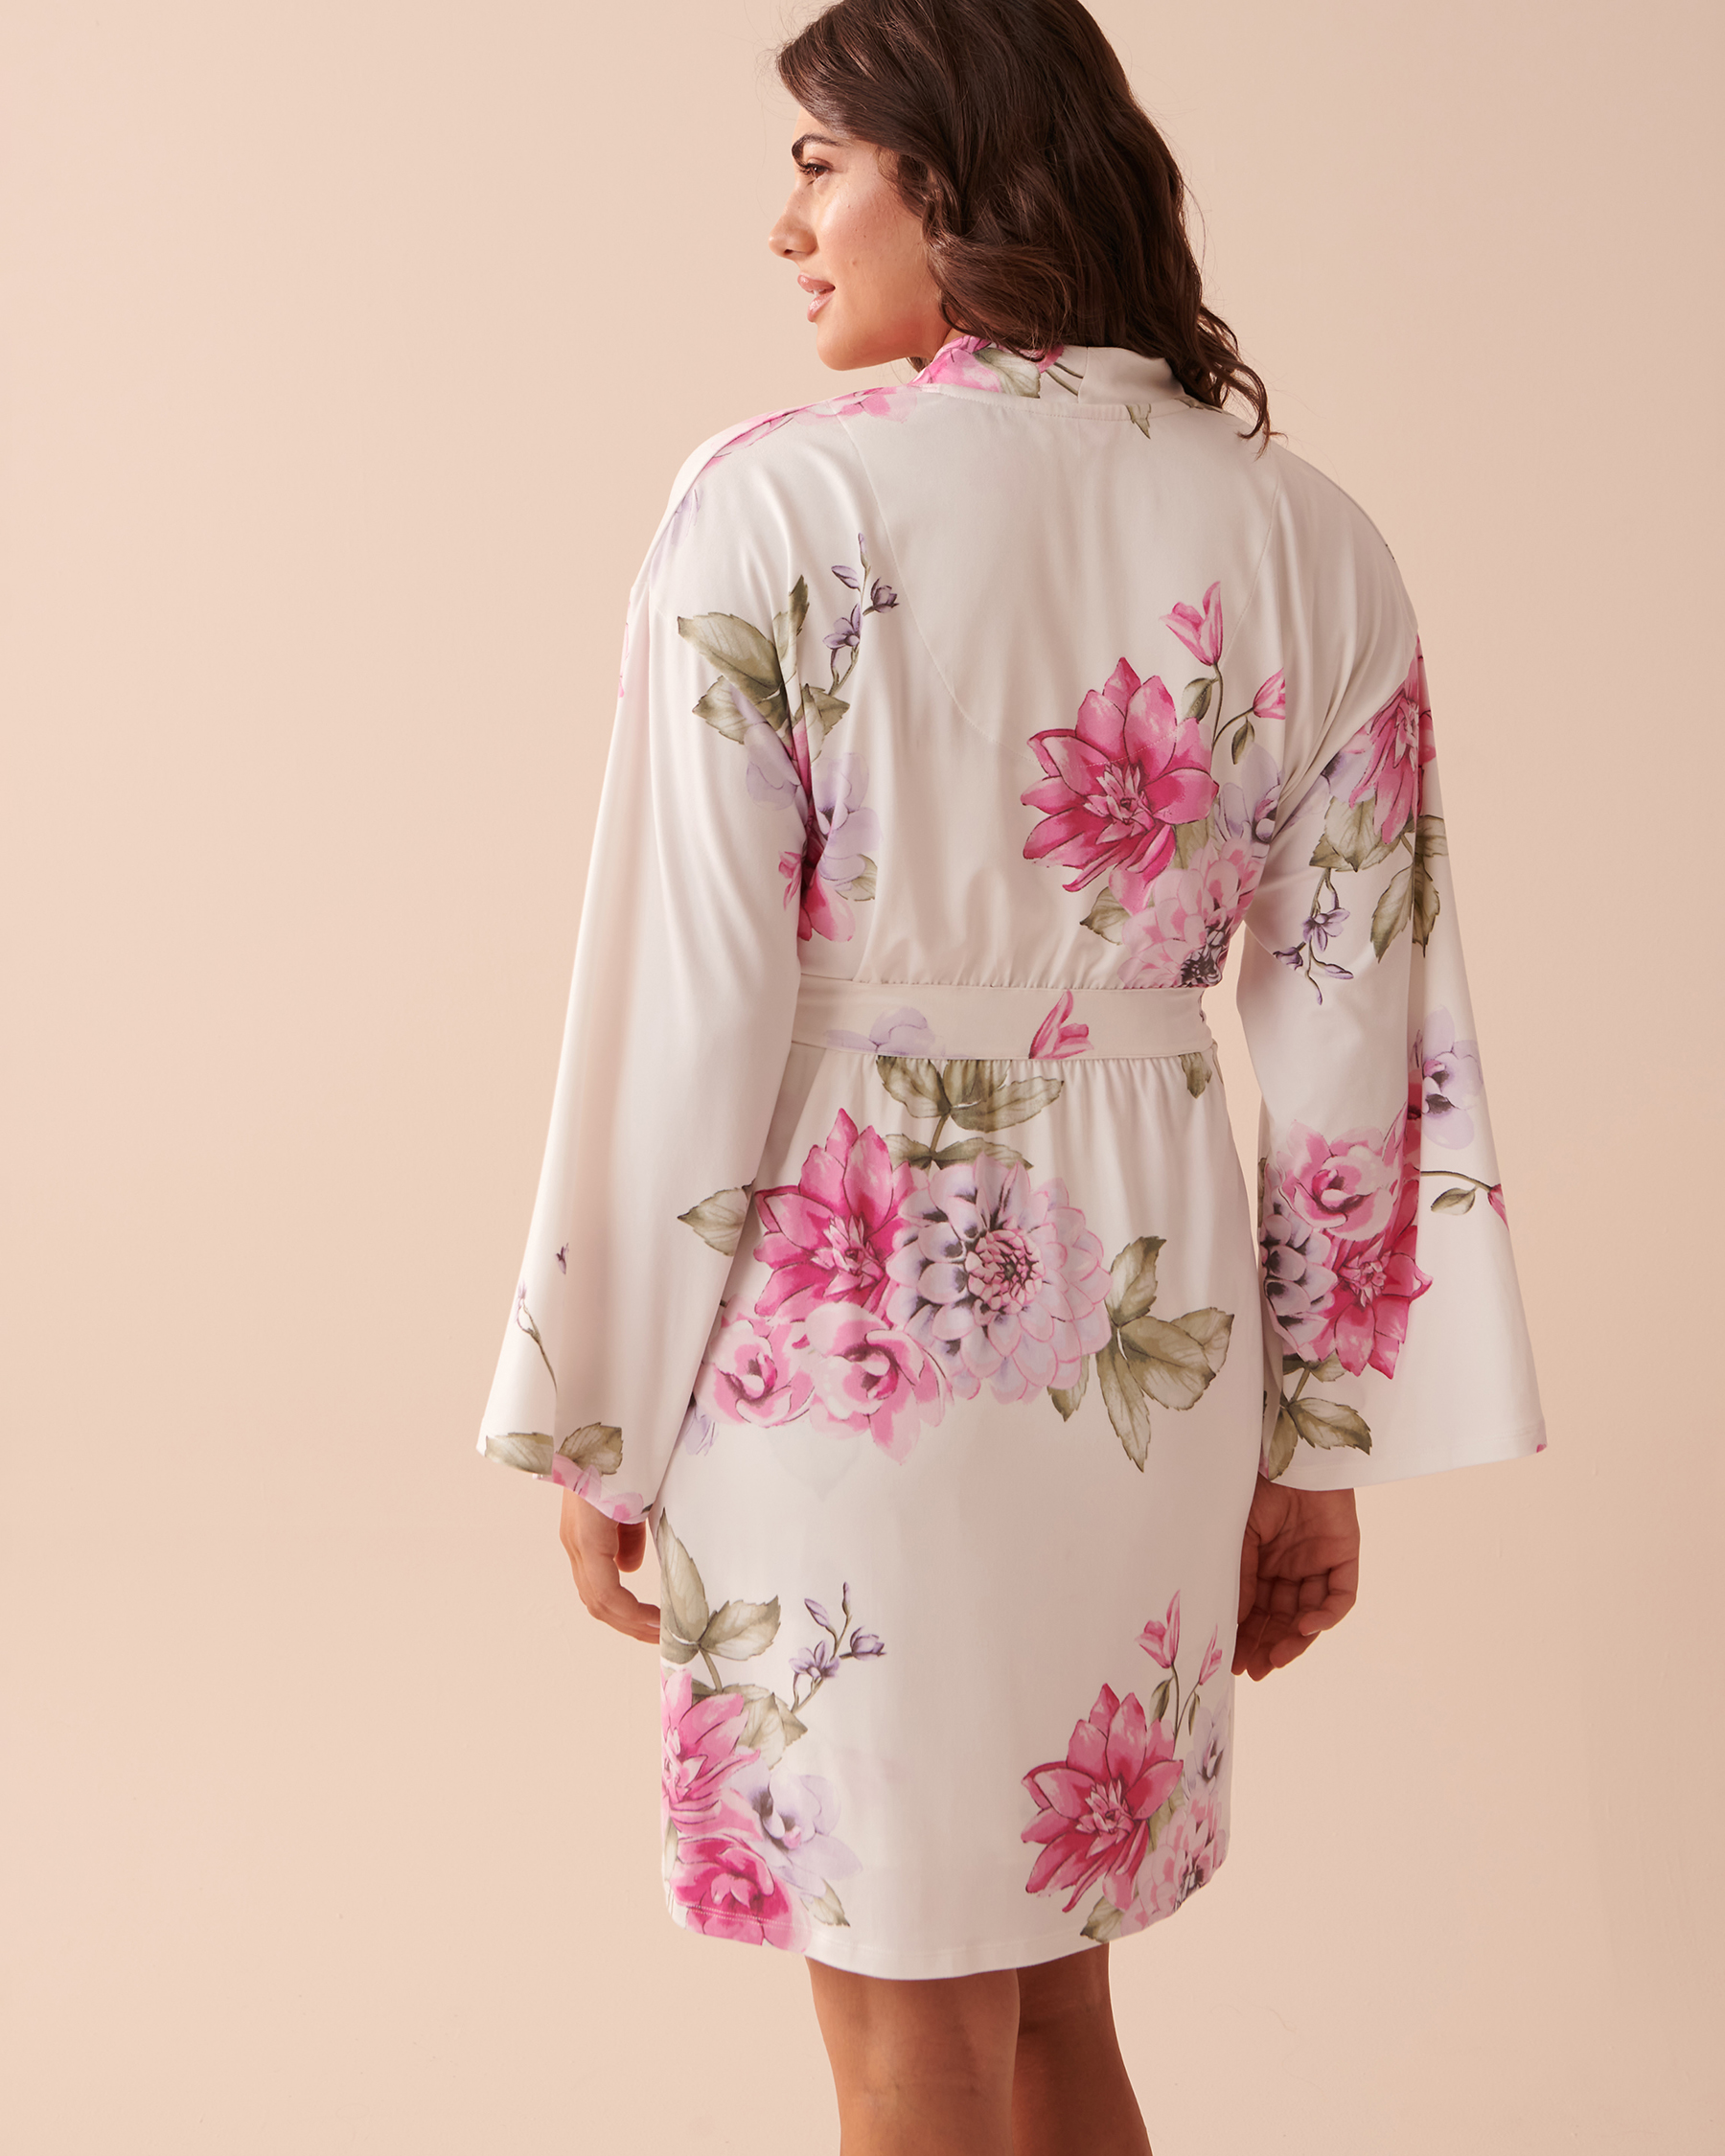 la Vie en Rose Women’s Peonies Garden Floral Super Soft Kimono